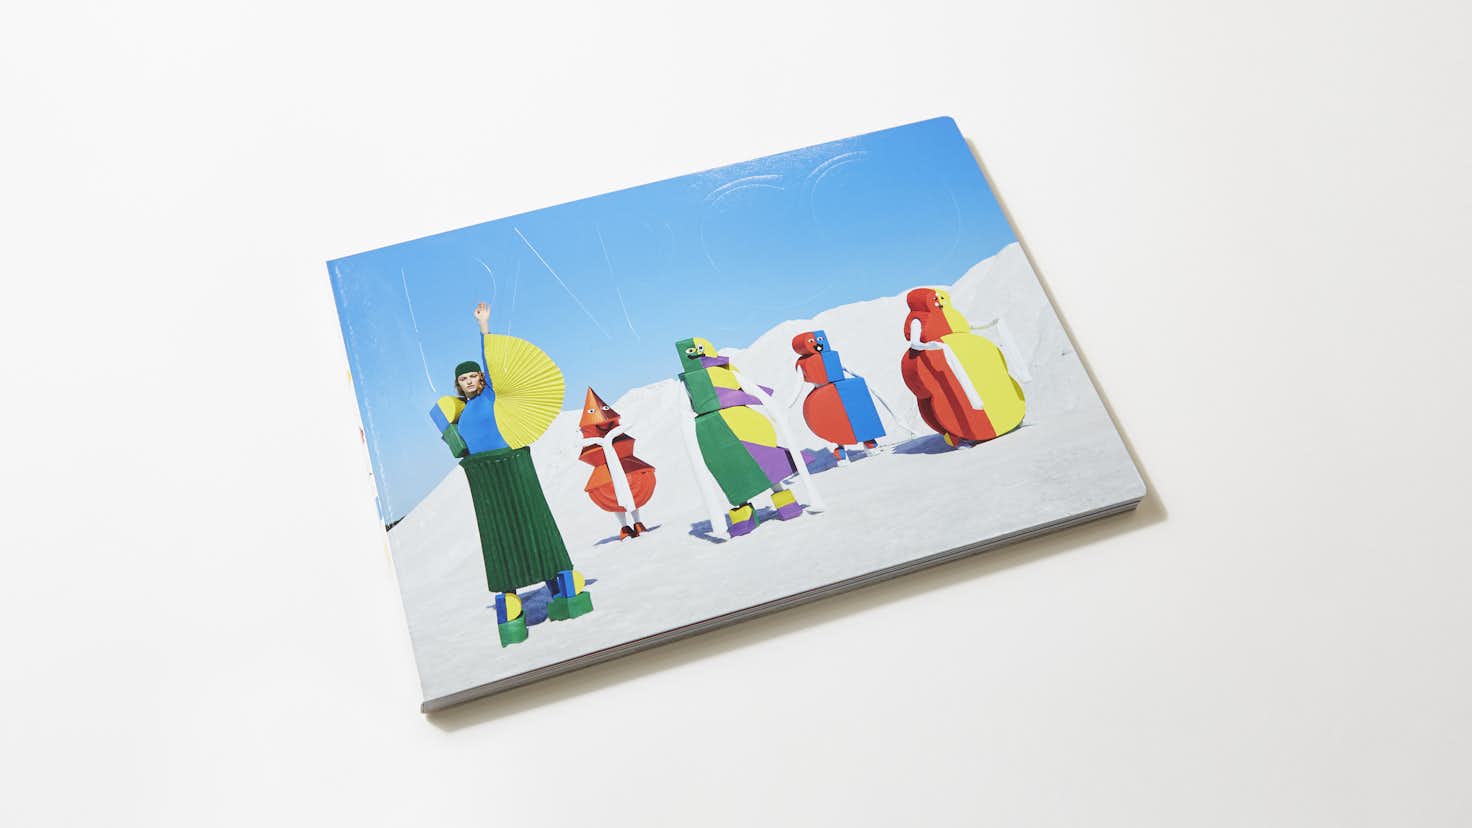 Parco の5文字をキャラクターに M M Paris らによるアートブック Parco Culture が発売 美術手帖